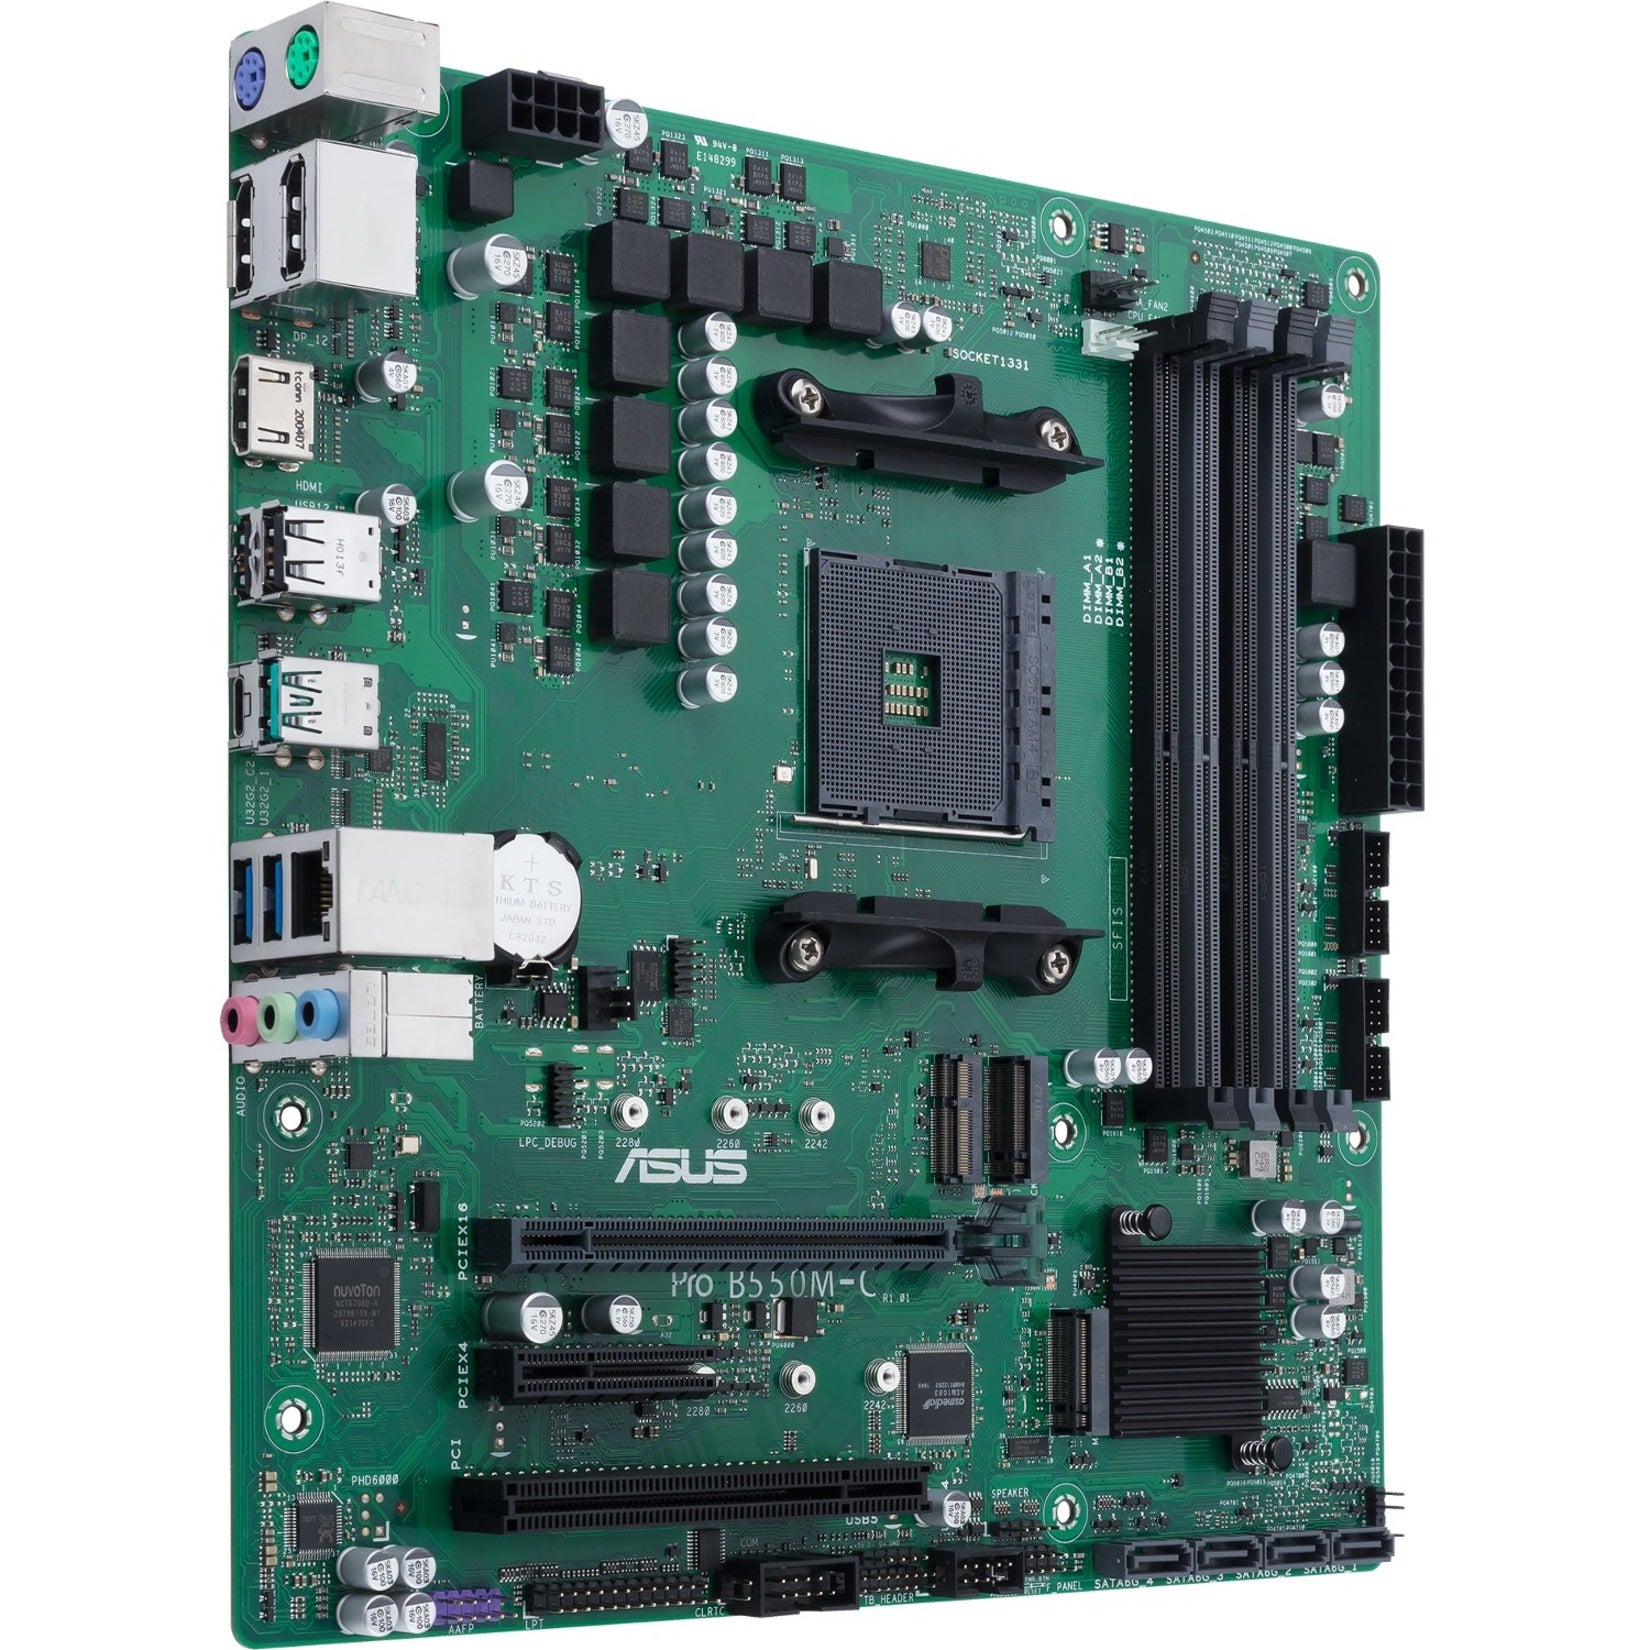 ASUS Prime A520M-A II/CSM AMD AM4(3rd Gen Ryzen) microATX Commercial  Motherboard(ECC Memory,M.2 Support,1Gb Ethernet, DP/HDMI 2.1/D-Sub,  4K@60HZ